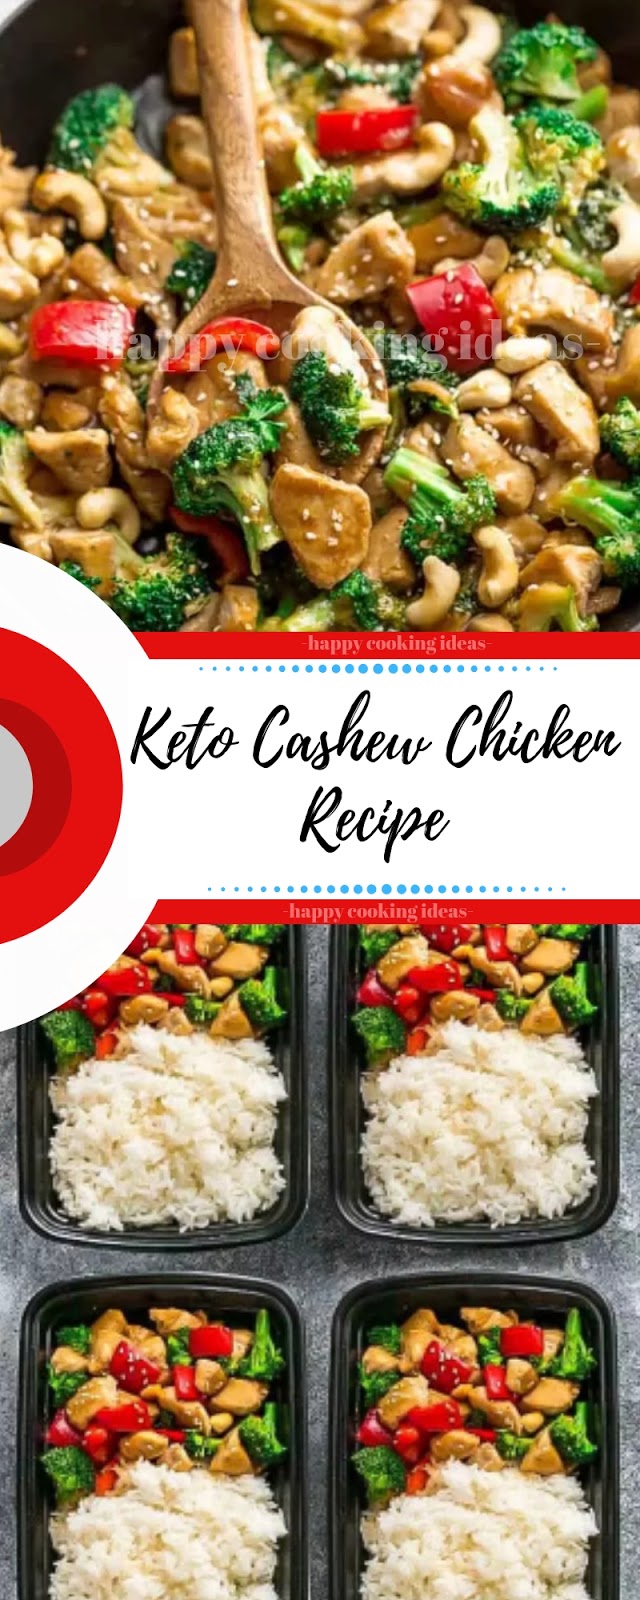 Keto Cashew Chicken Recipe